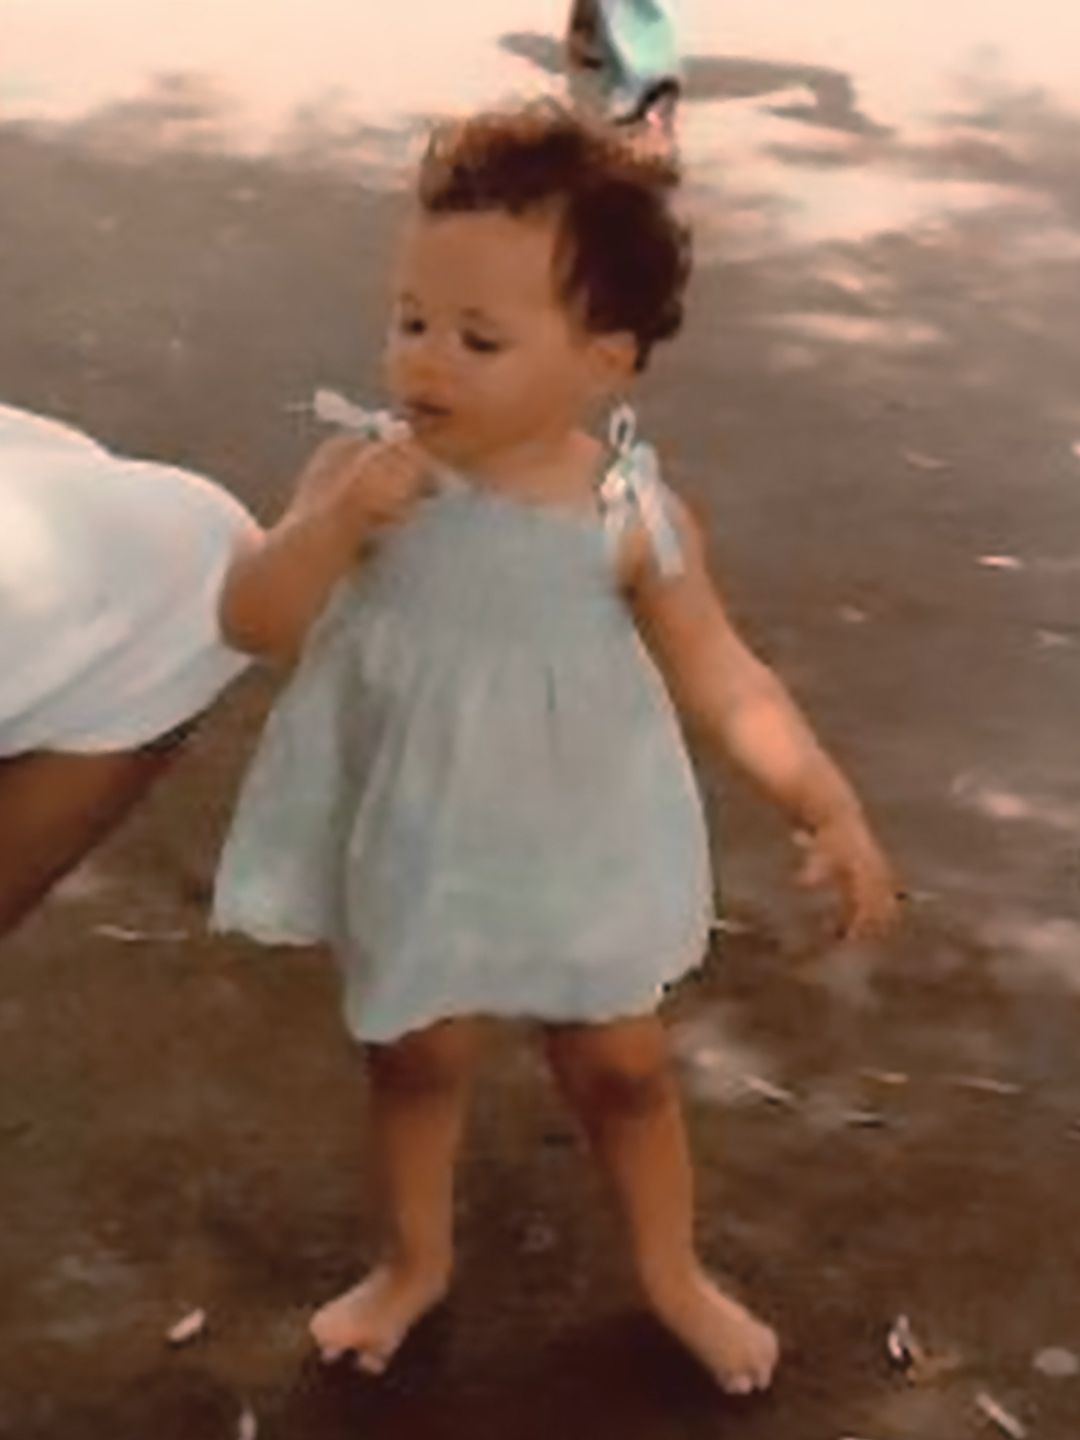 A baby Meghan Markle in a blue dress blowing bubbles